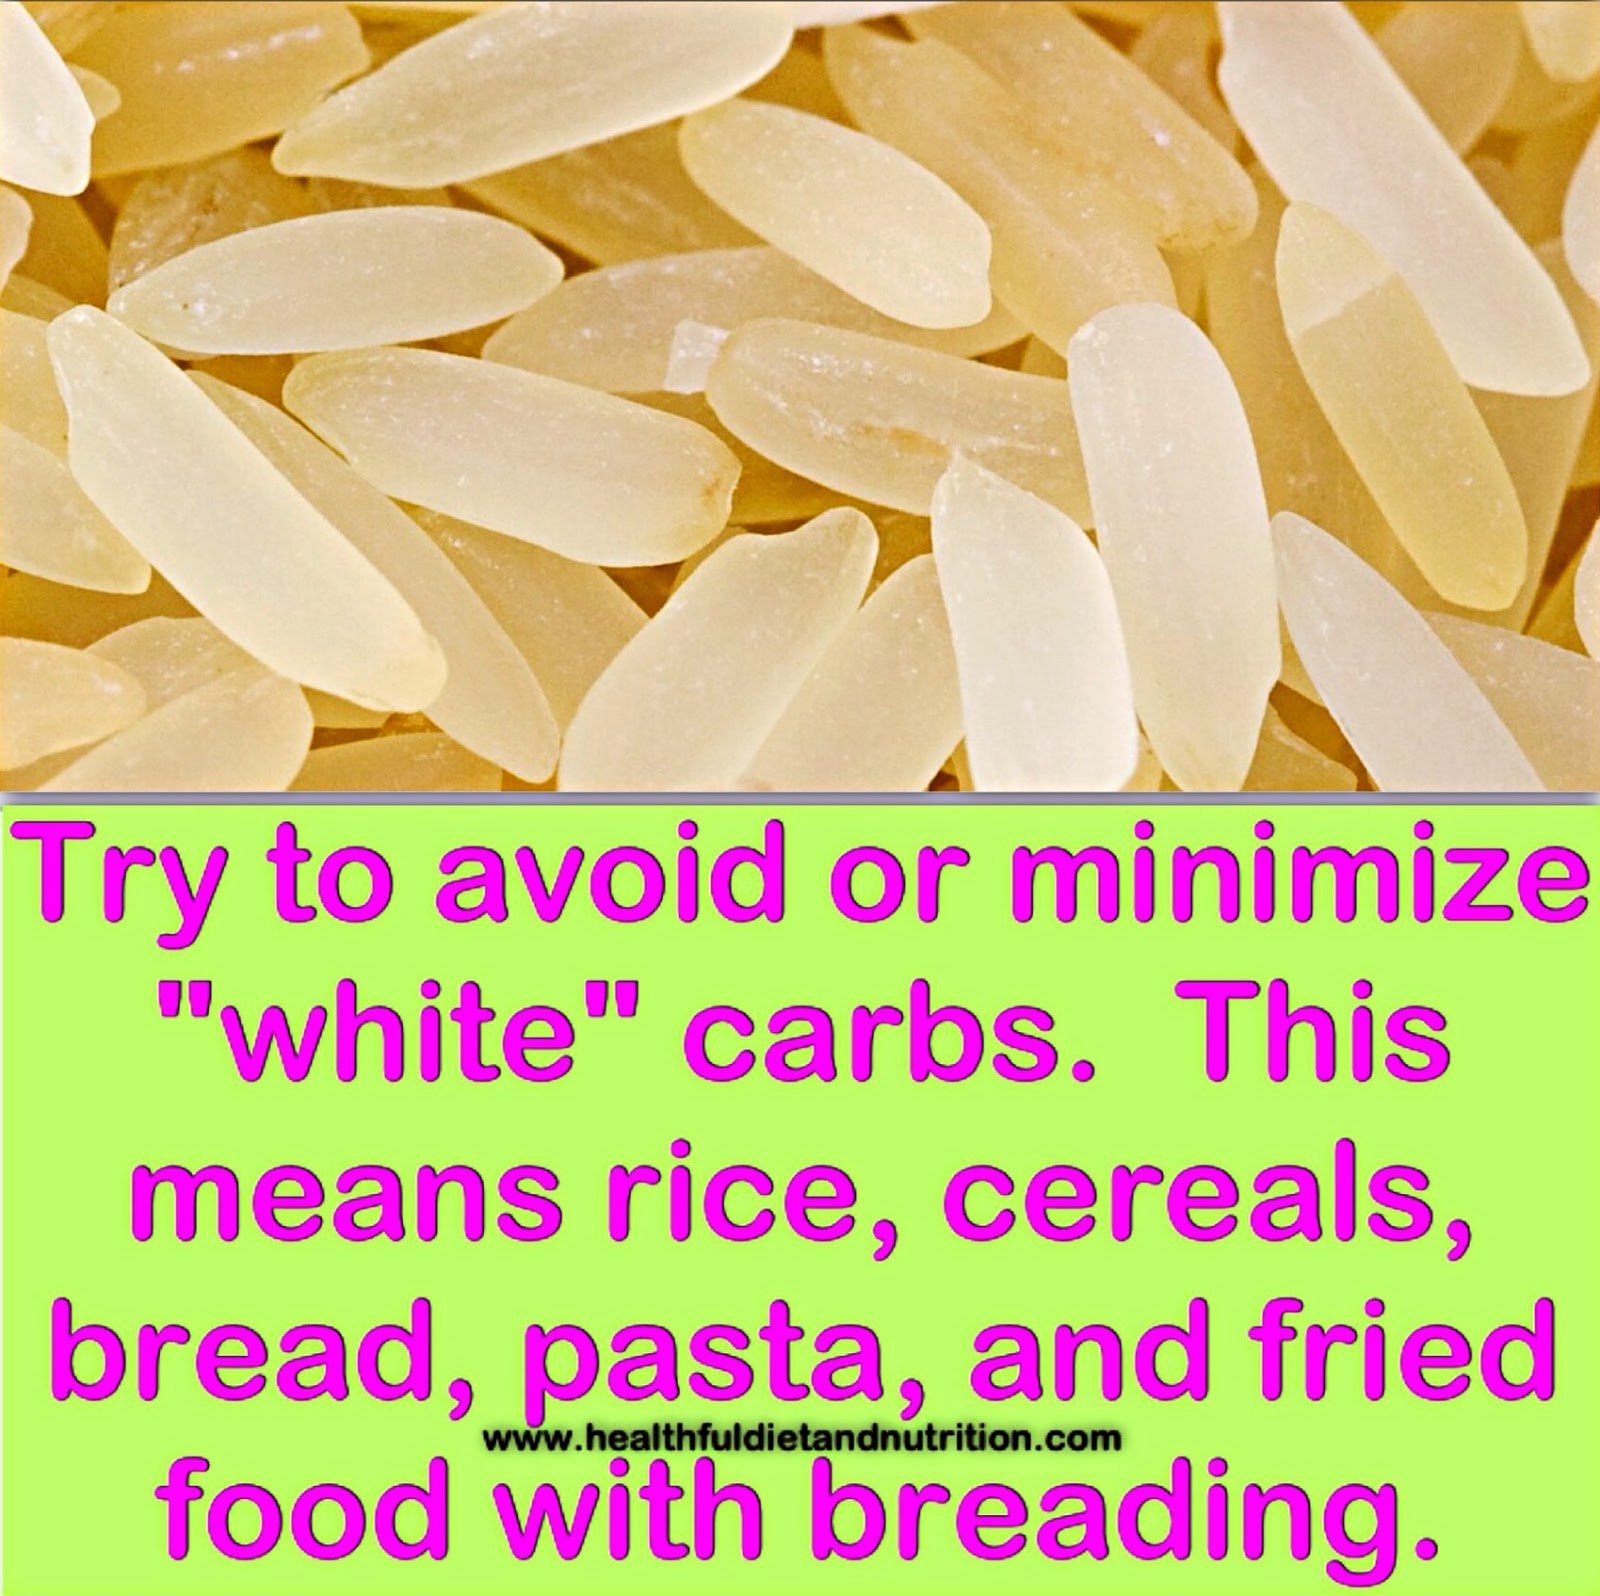 Minimize or Avoid White Carbs